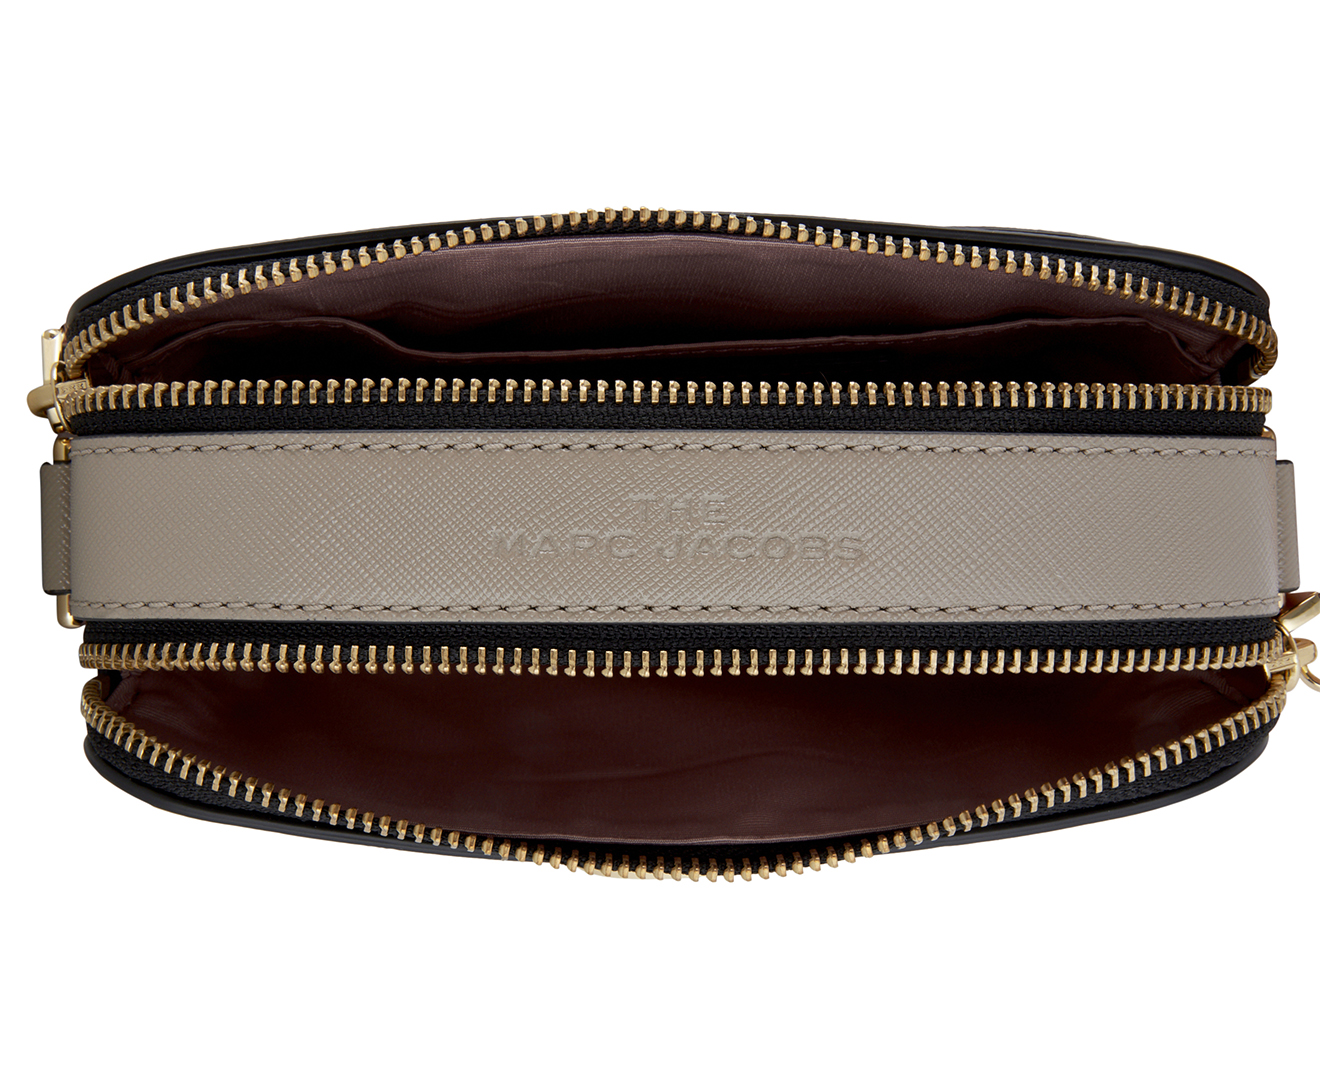 Marc Jacobs Snapshot Bag in Vachetta Red Multi 